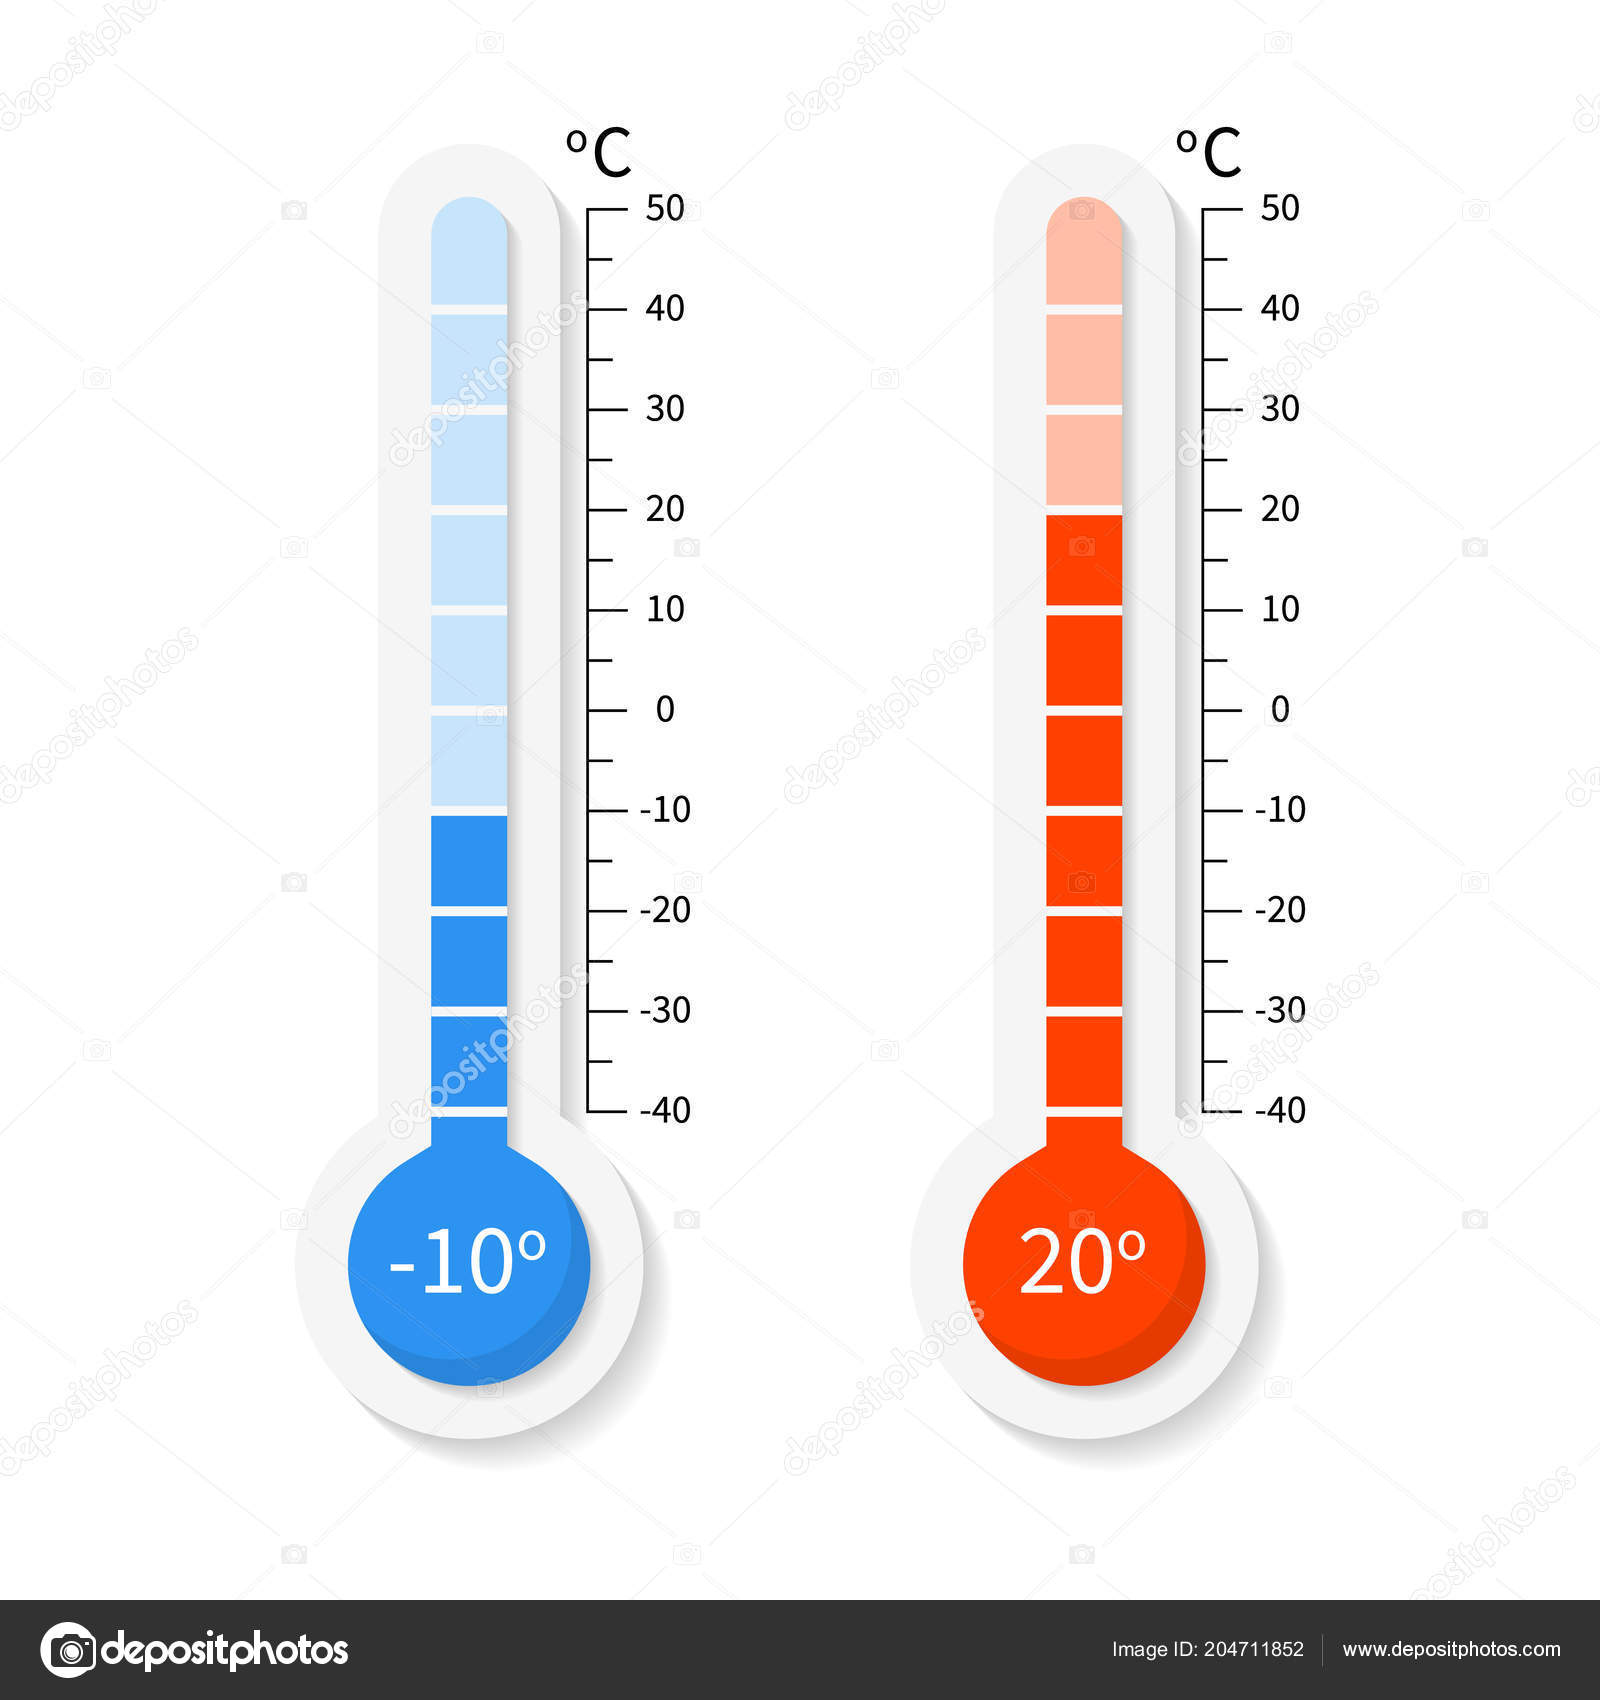 https://st4.depositphotos.com/15640006/20471/v/1600/depositphotos_204711852-stock-illustration-vector-celsius-fahrenheit-meteorology-thermometers.jpg